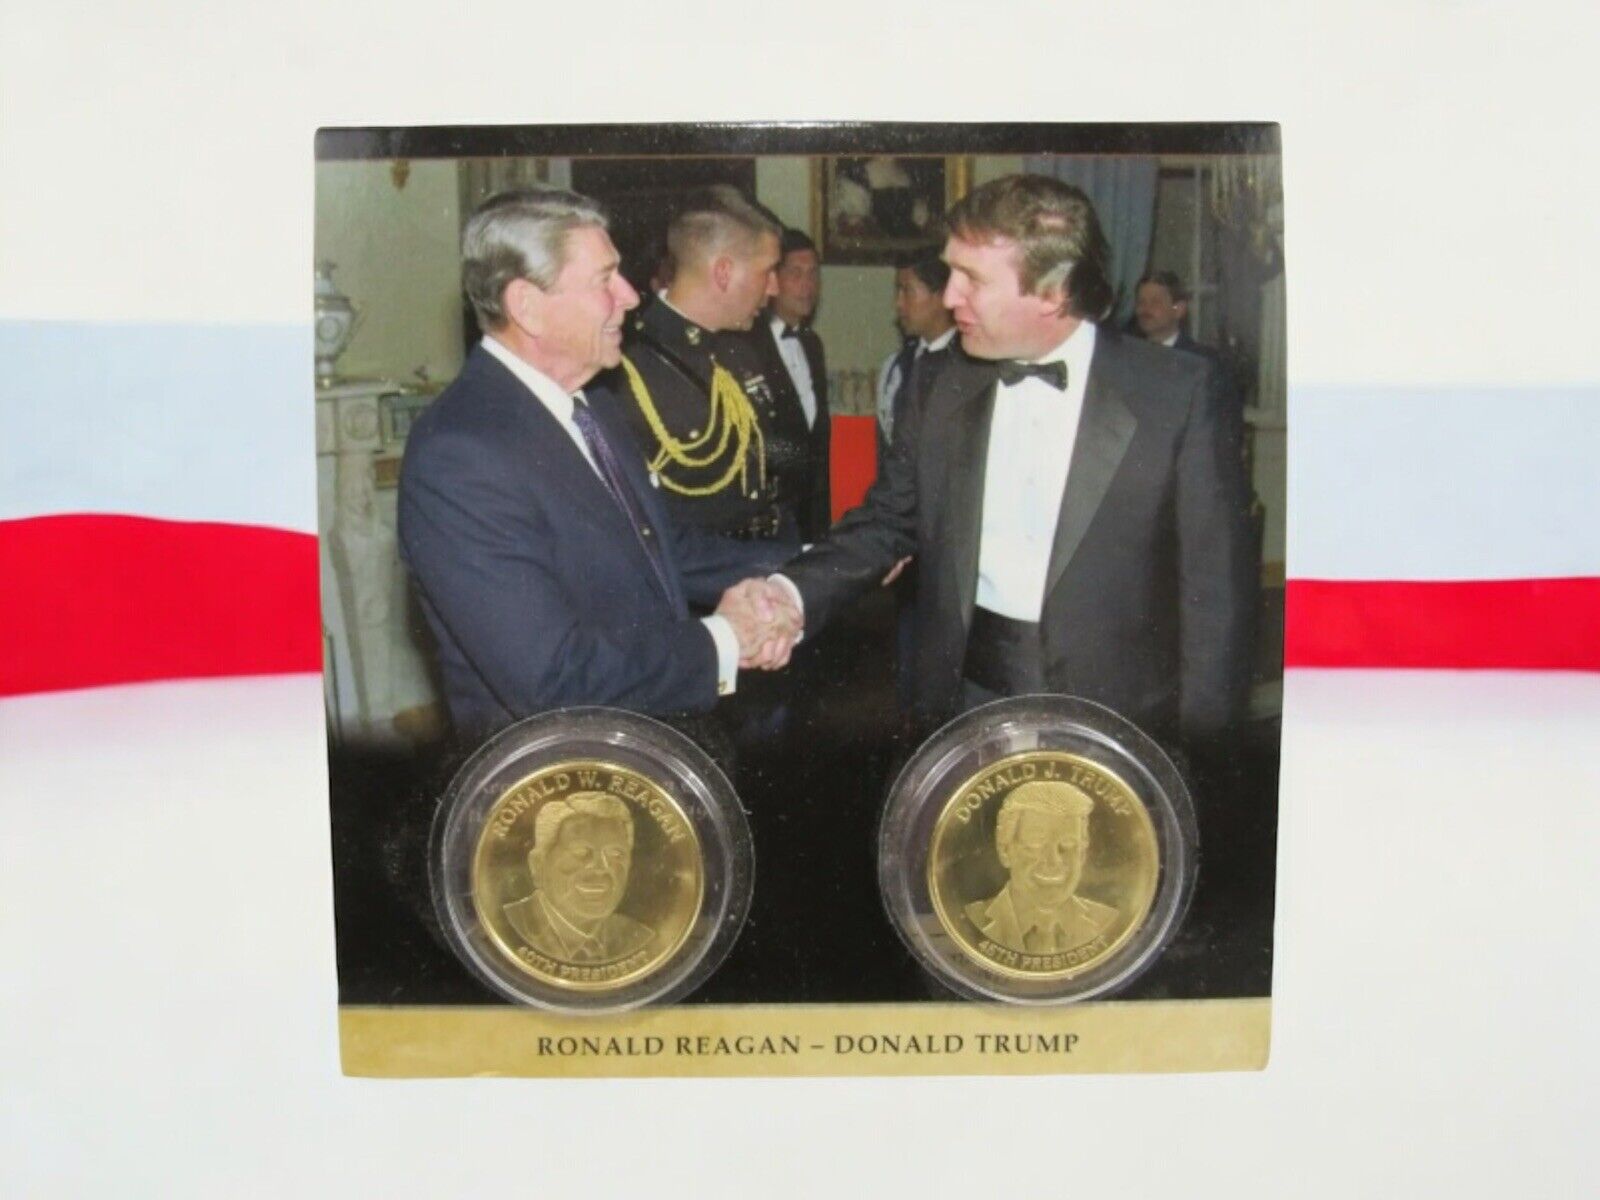 2020 Ronald Reagan - Donald Trump RNC Limited Commemorative 2 Coin Set Rare